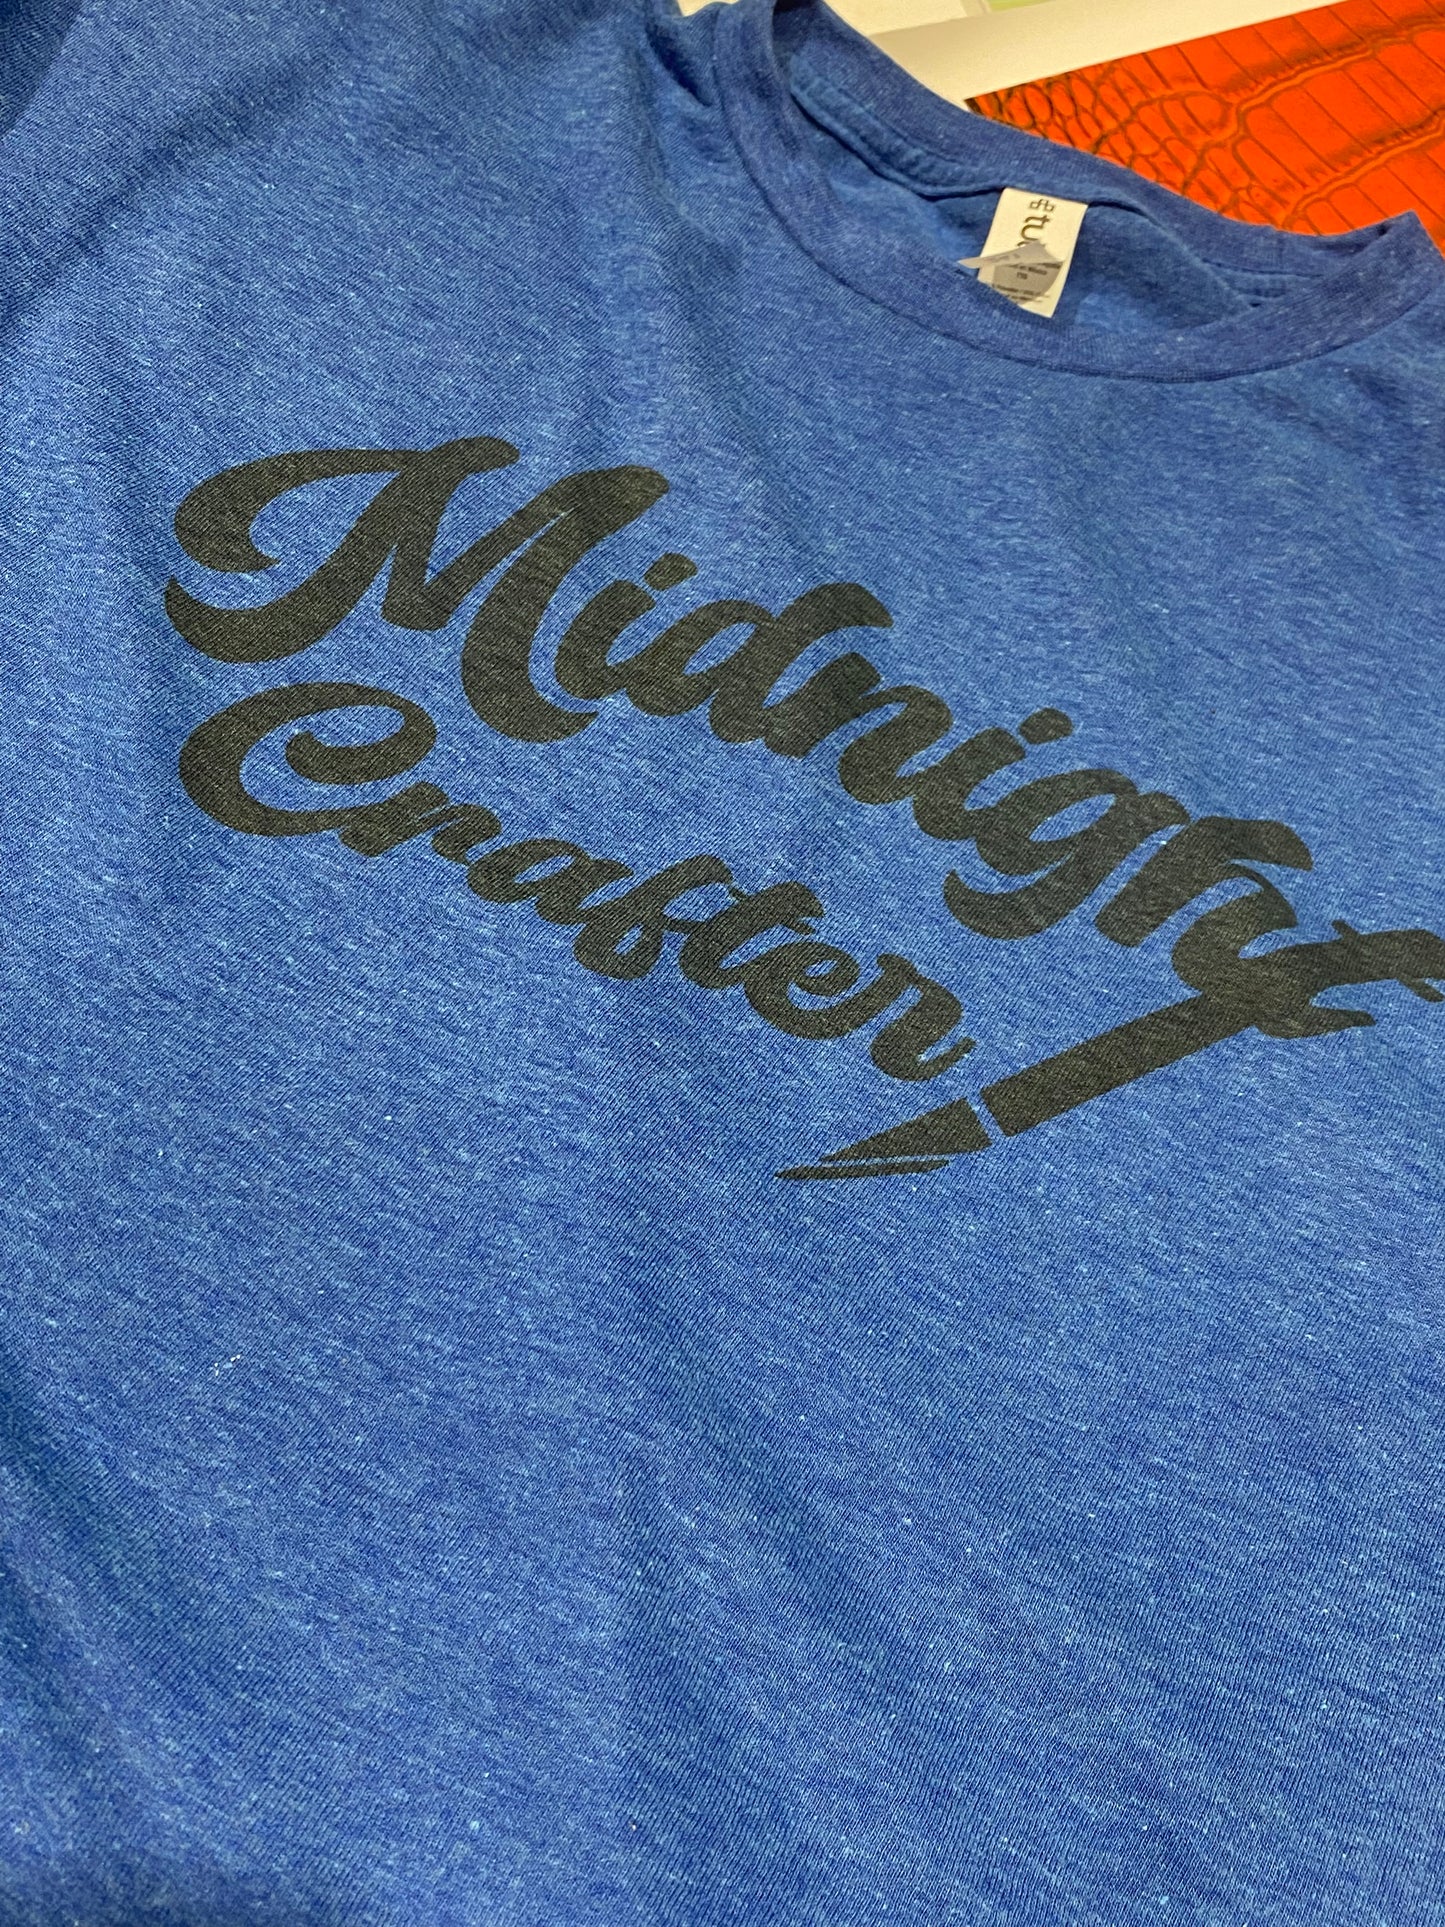 Midnight Crafter T-shirt